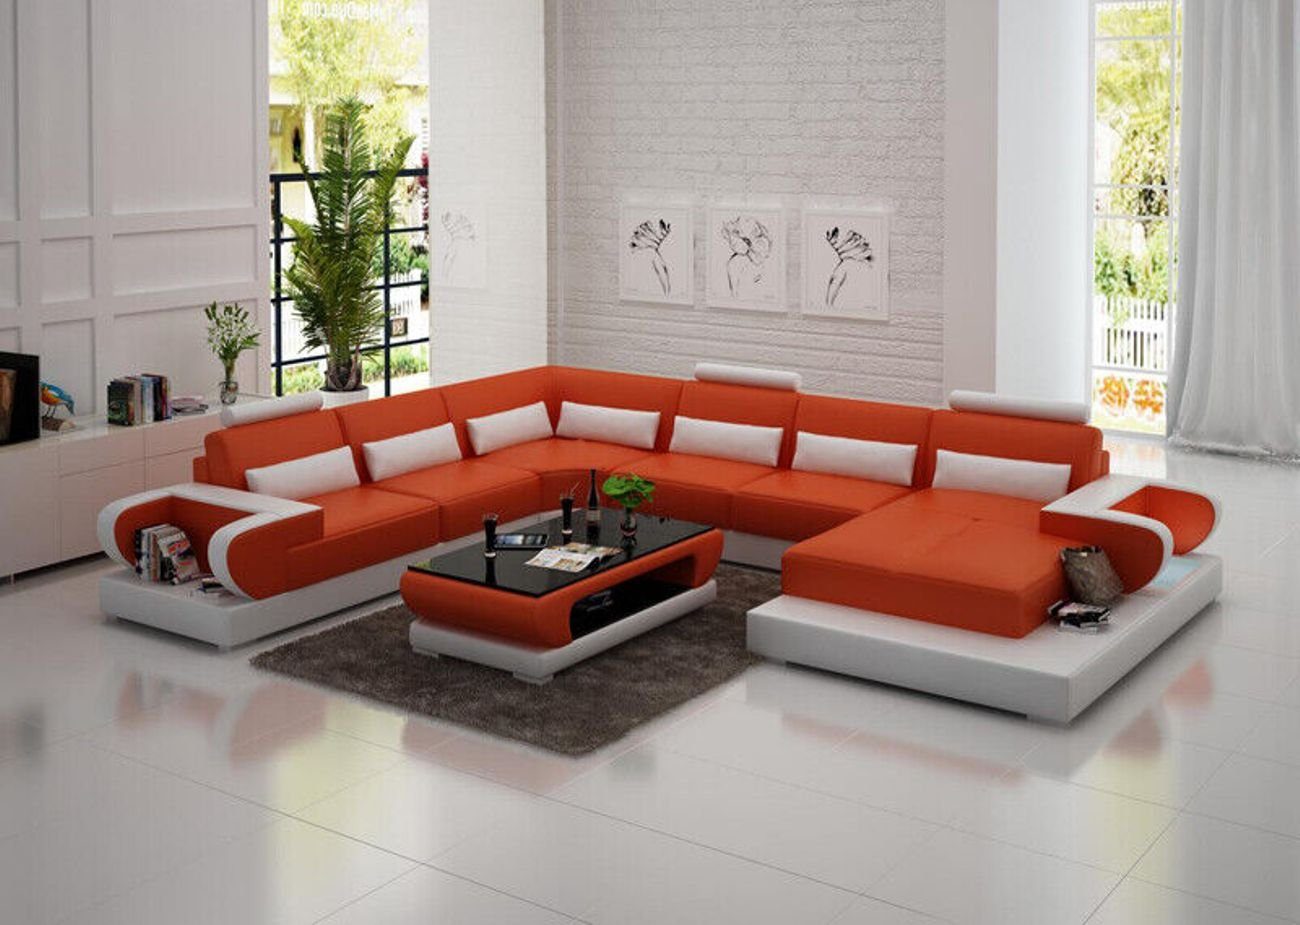 JVmoebel Ecksofa Ledersofa Couch Wohnlandschaft Ecksofa Eck Garnitur Design Modern Sofa Orange